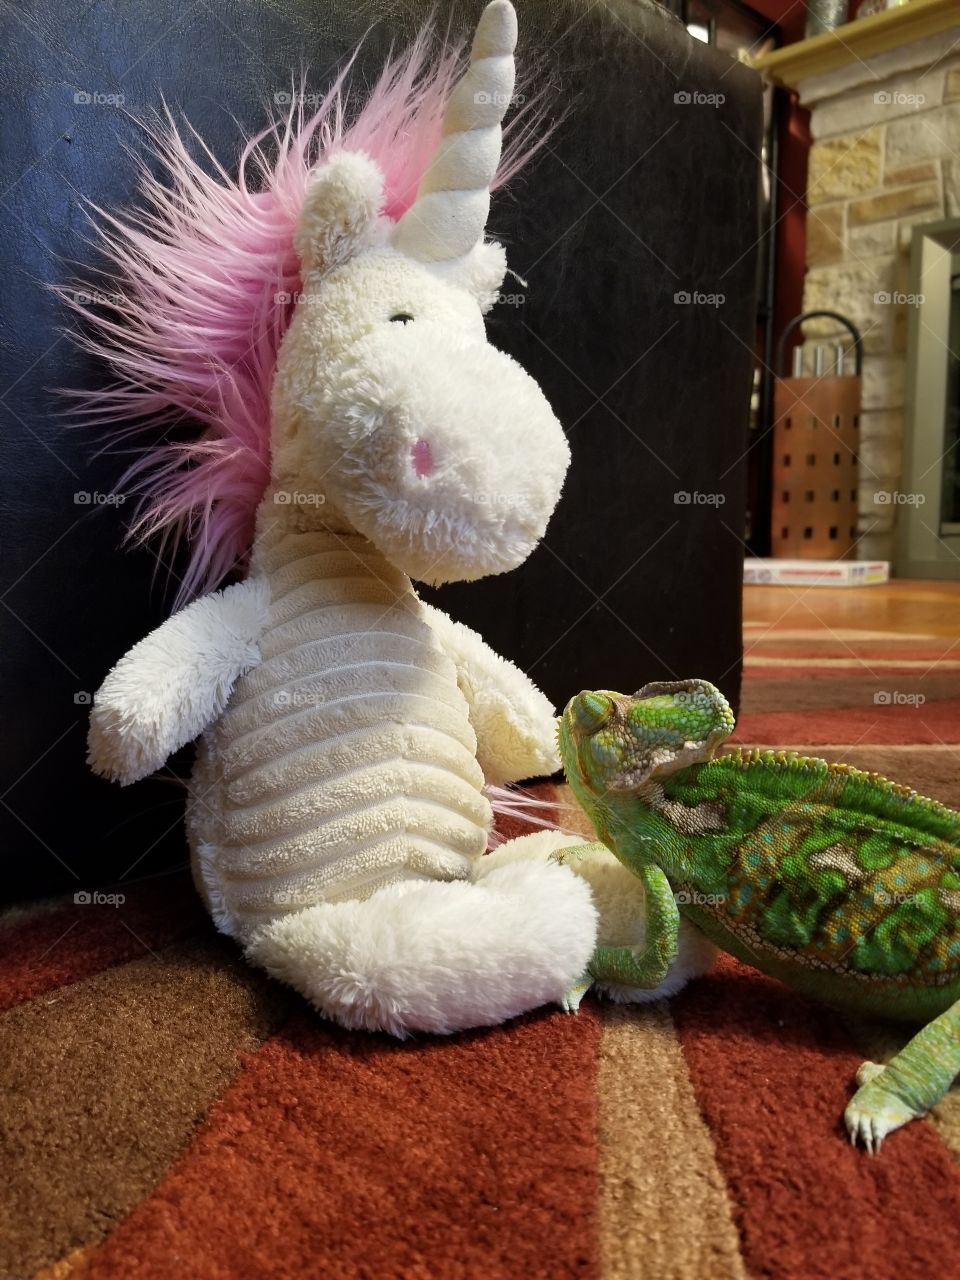 unicorn and lizard